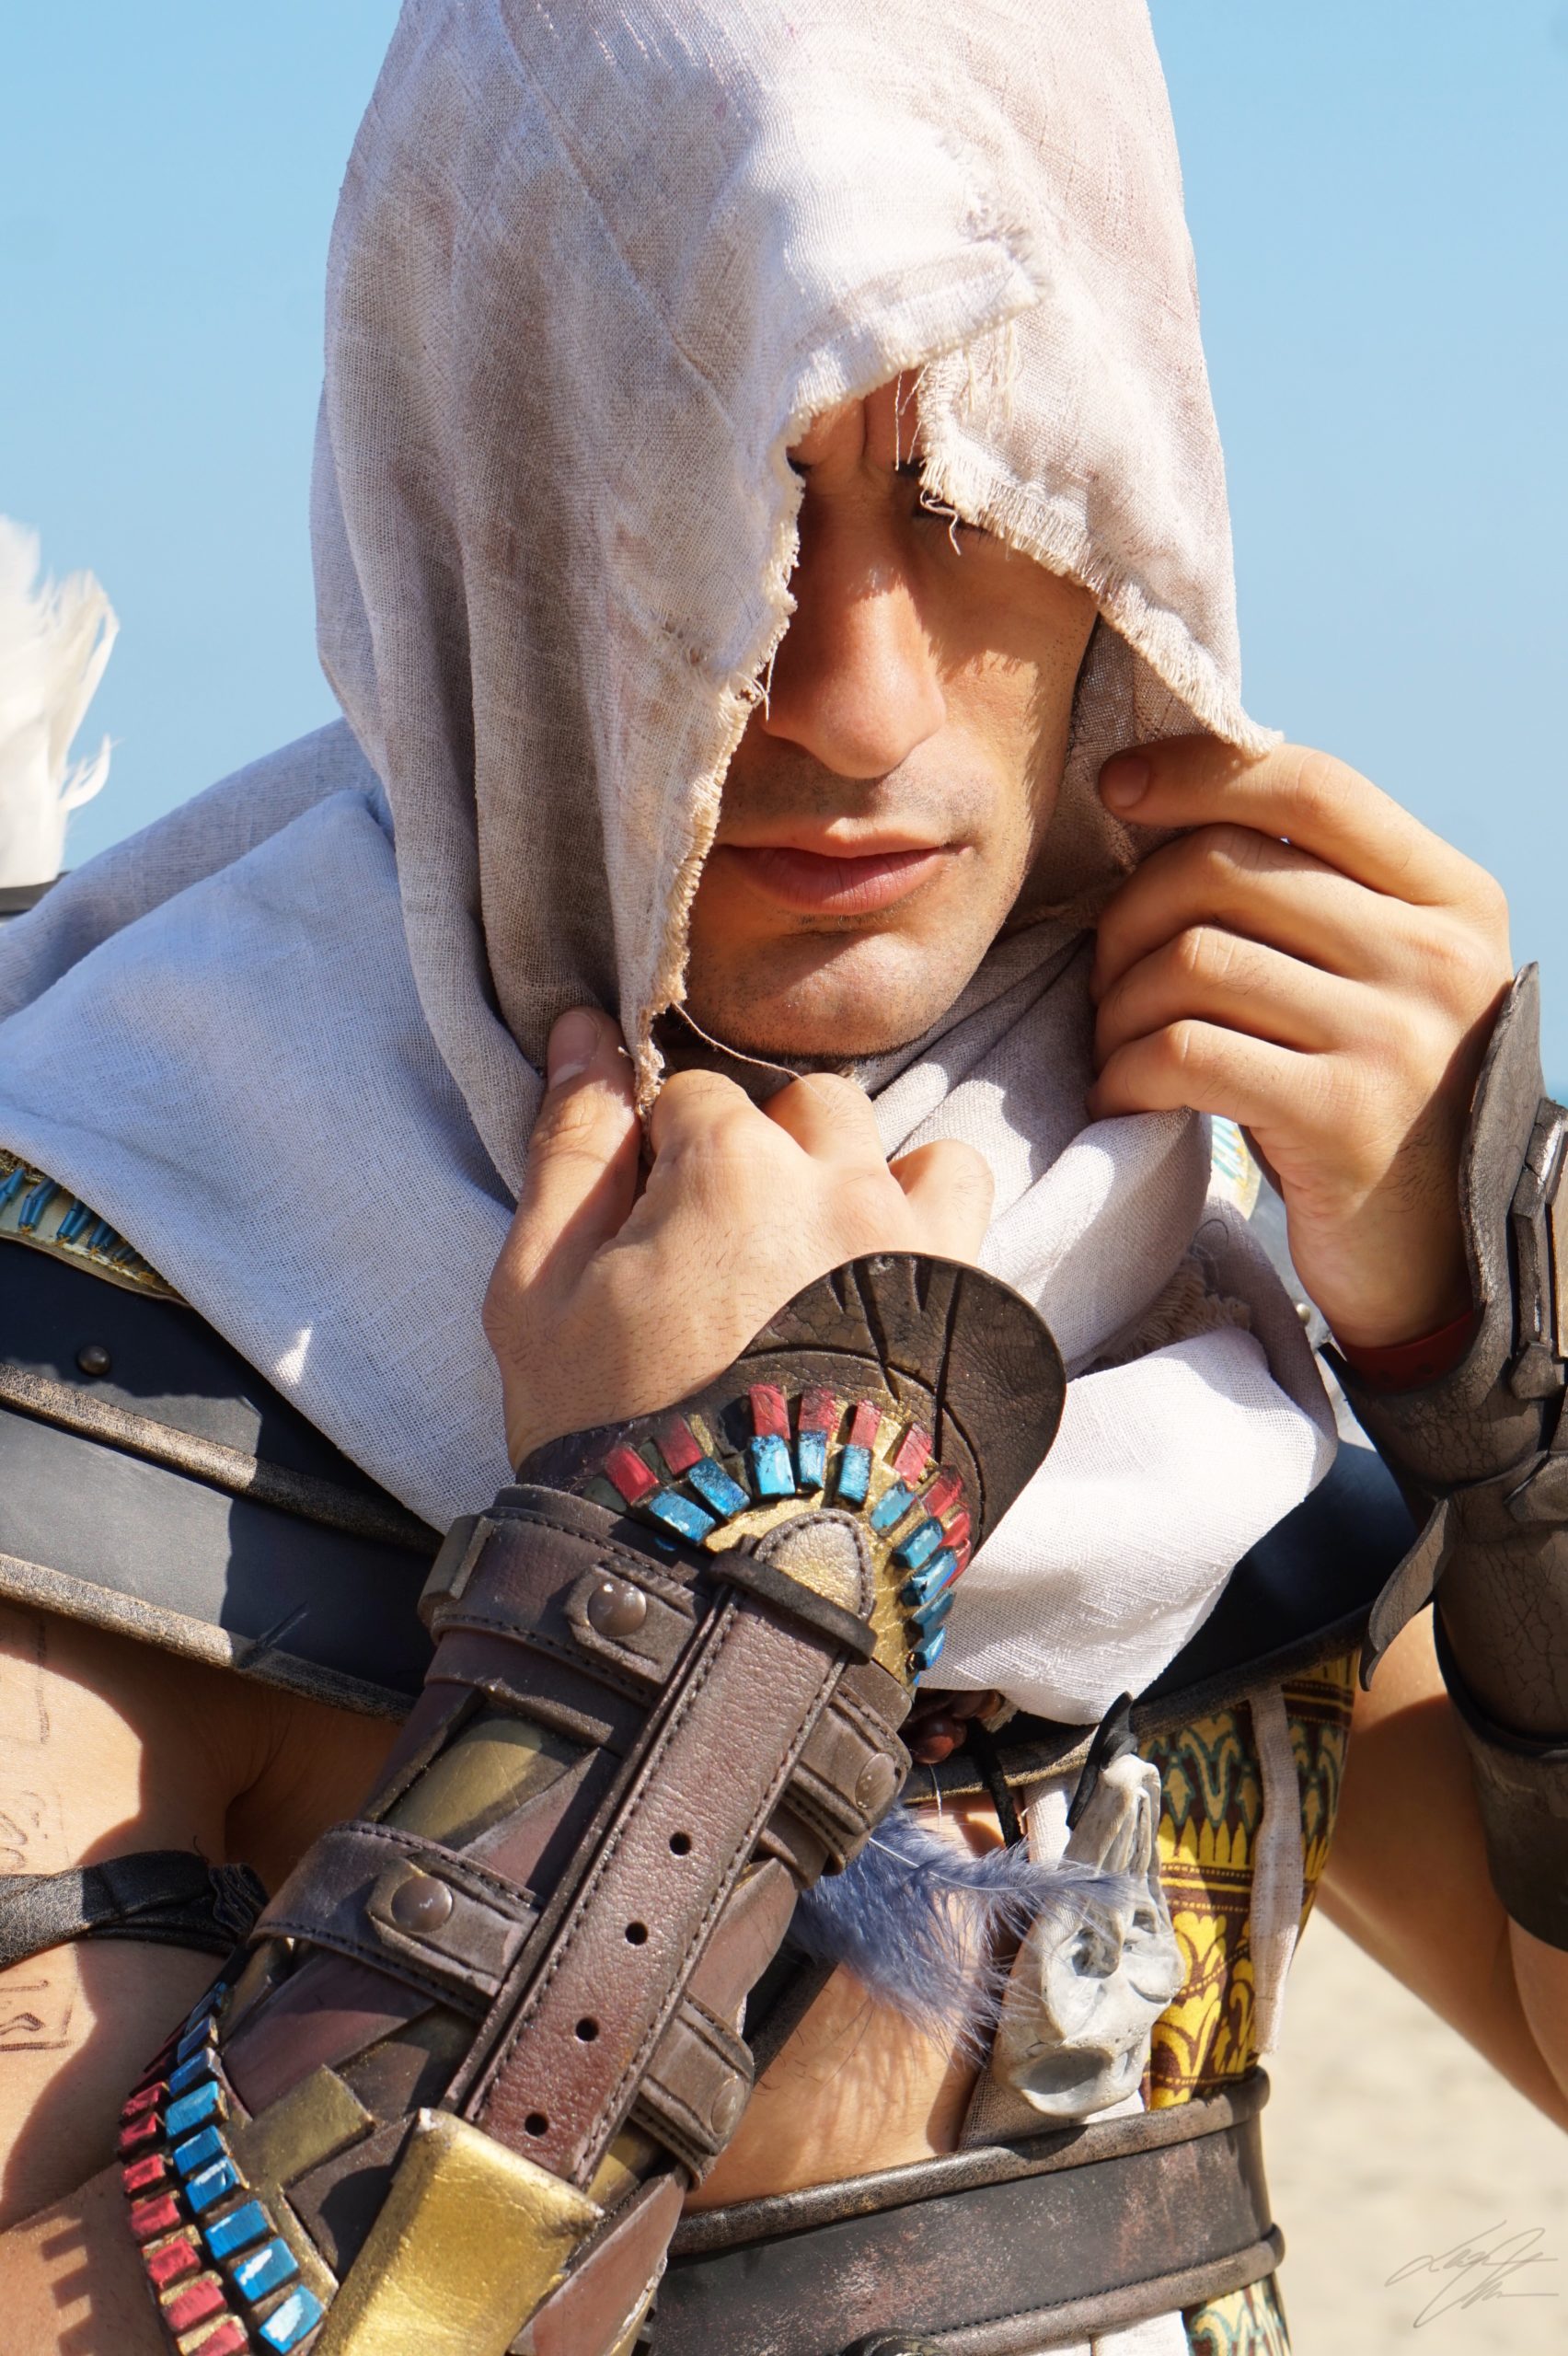 Assassin's Creed Origins Bayek of Siwa Cosplay Costume